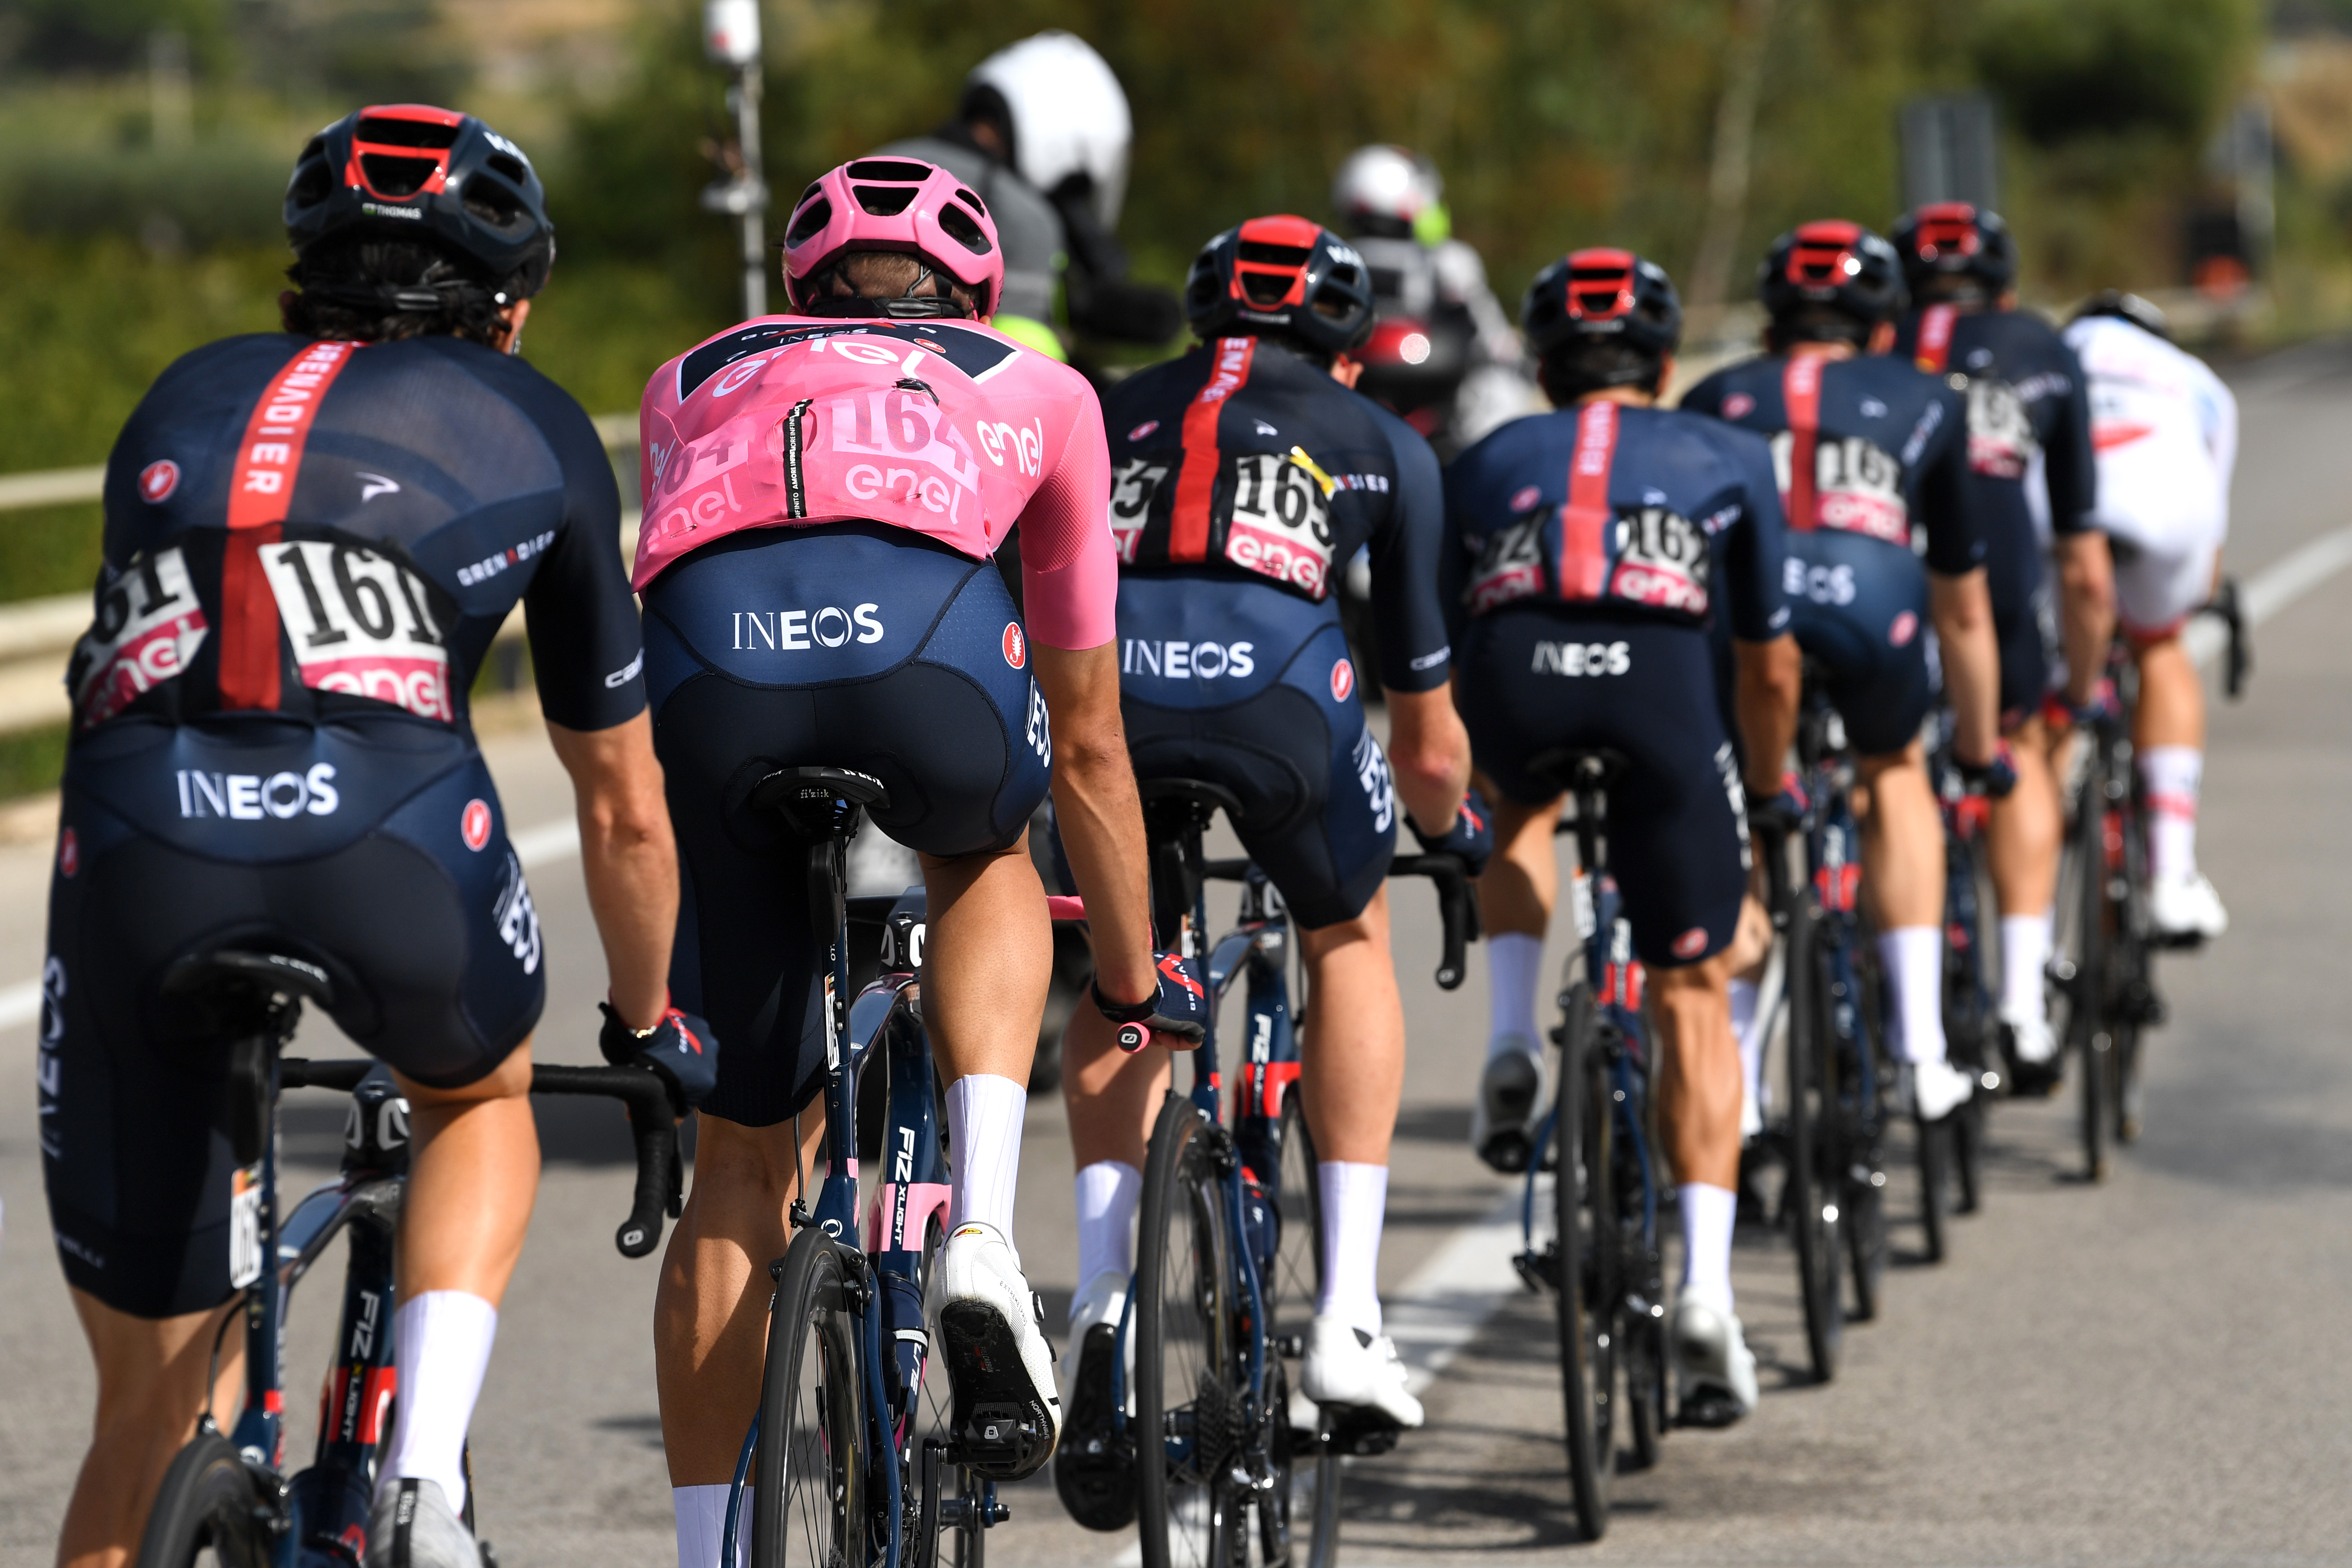 Giro d'Italia stage 2 - Live coverage | Cyclingnews